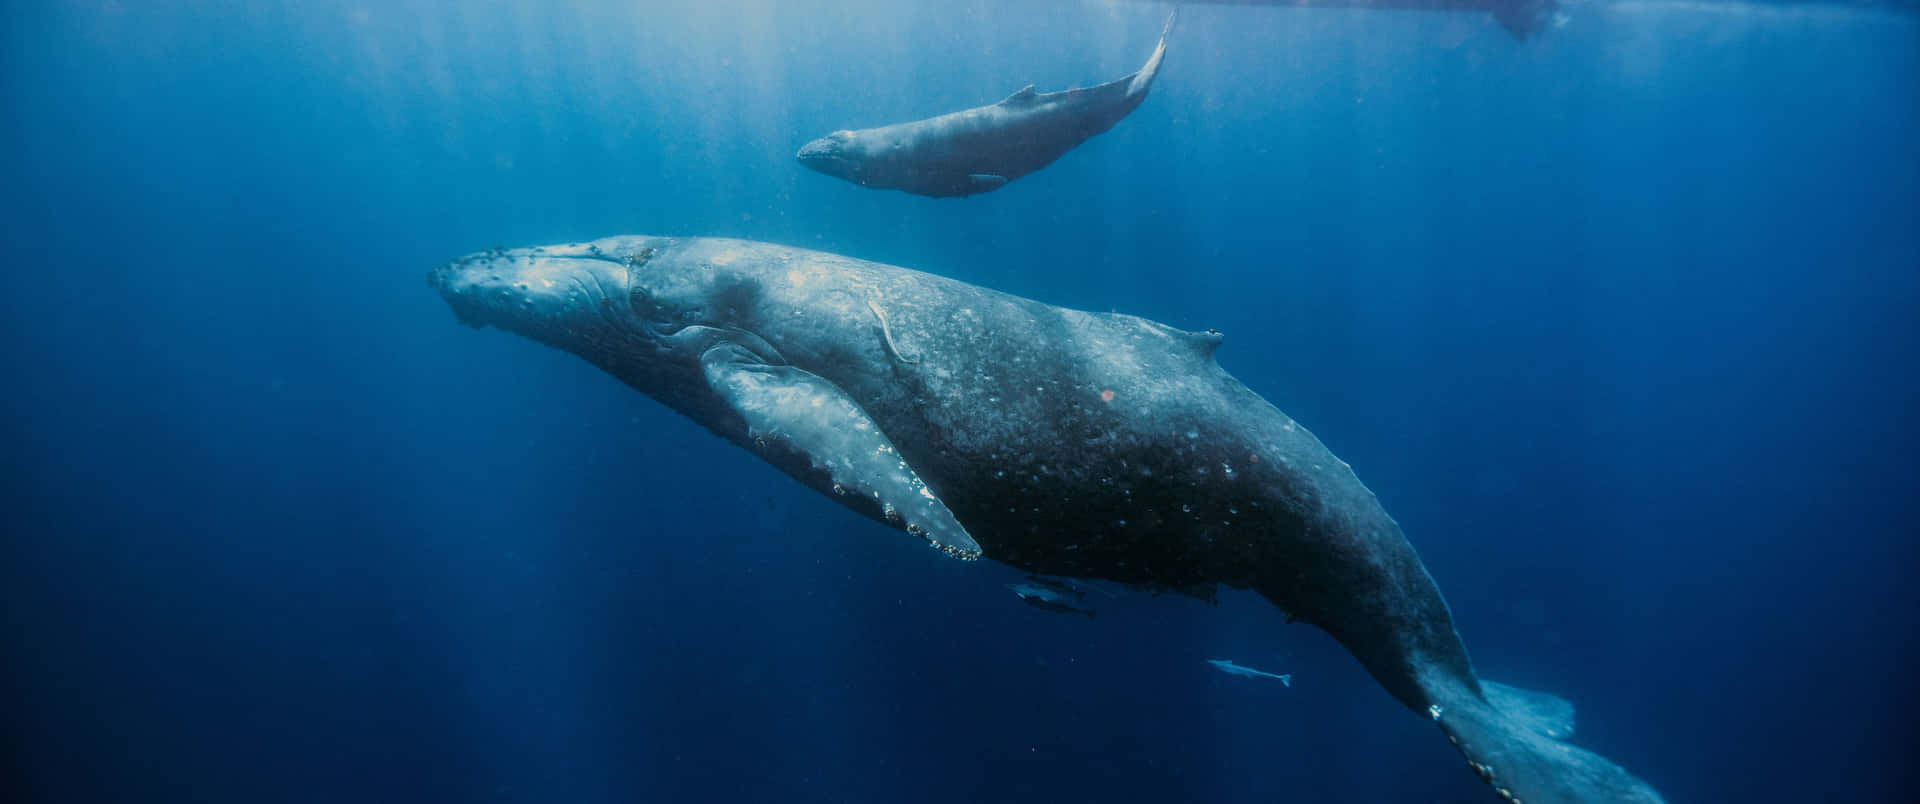 3440x1440 Animal Whale In Ocean Wallpaper